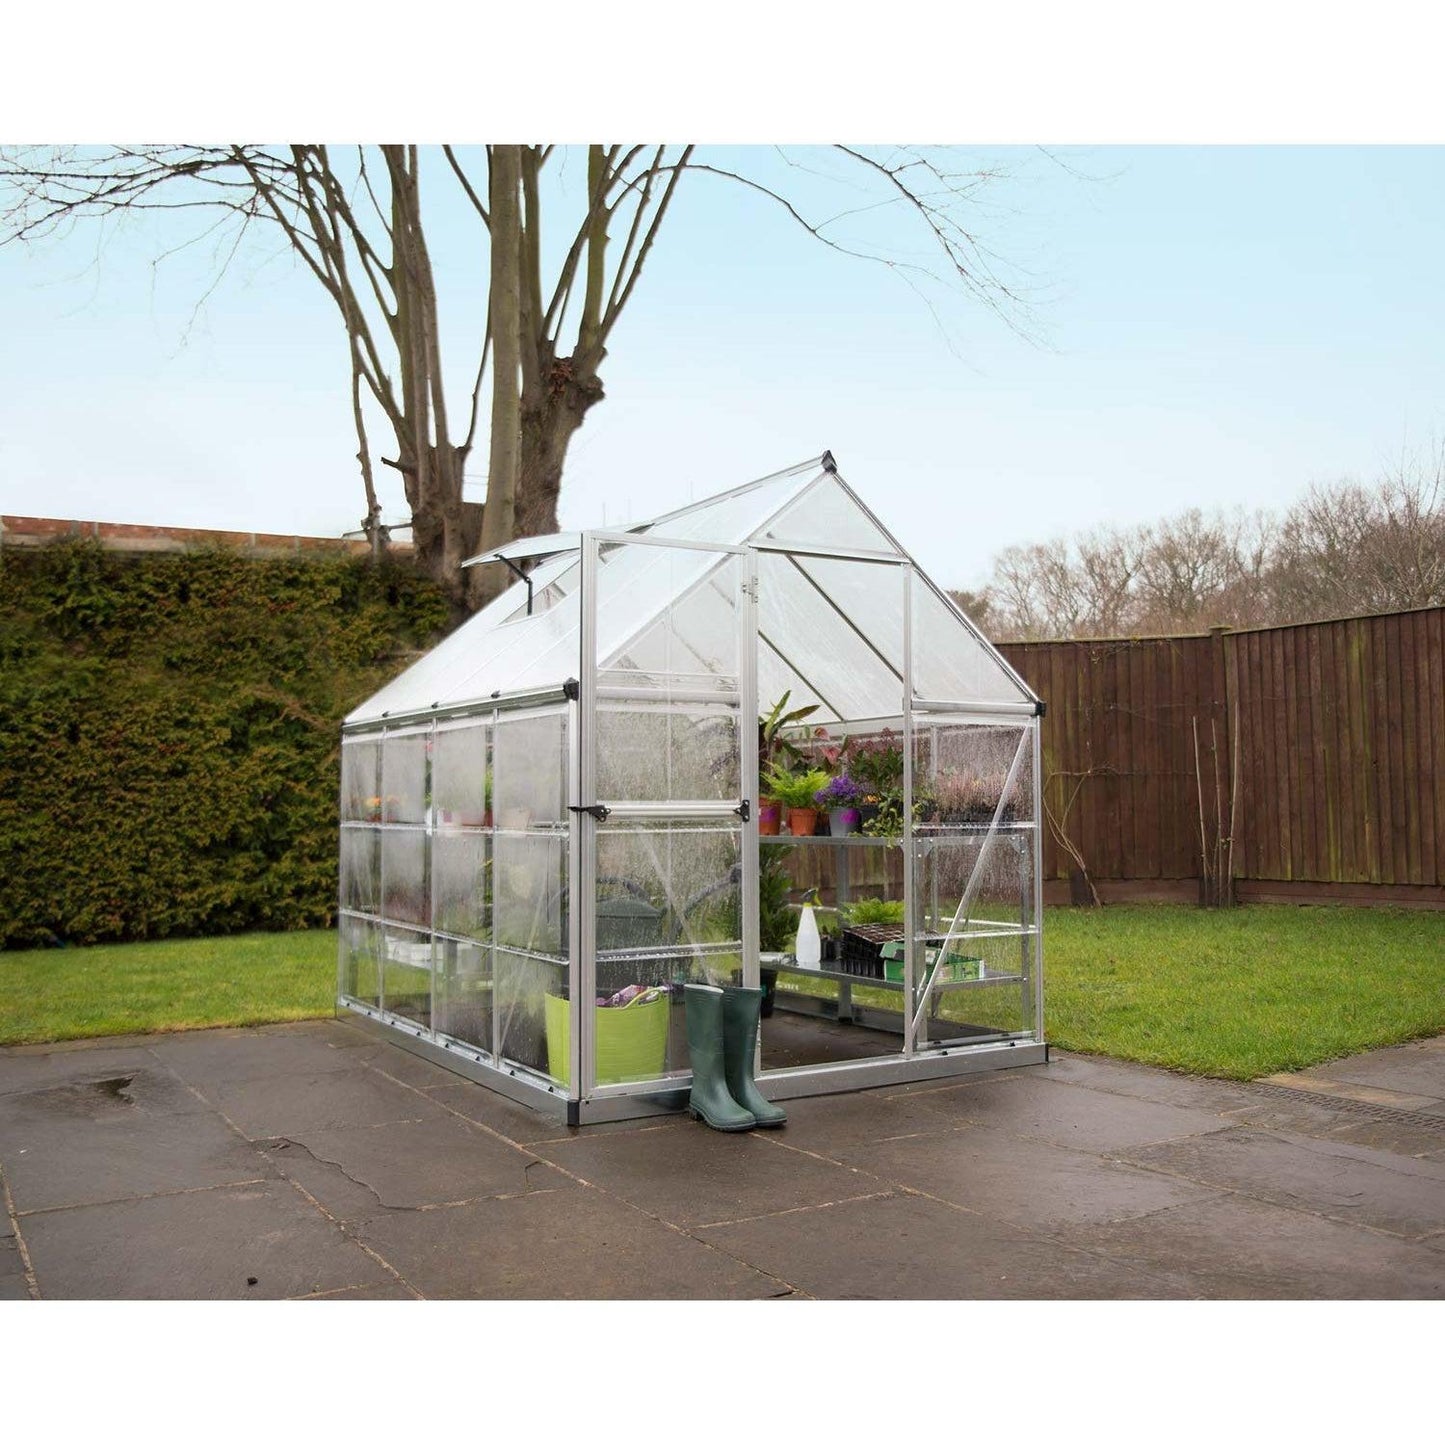 Hybrid Greenhouse 6 x 8 ft. Silver Frame | Palram-Canopia - Delightful Yard